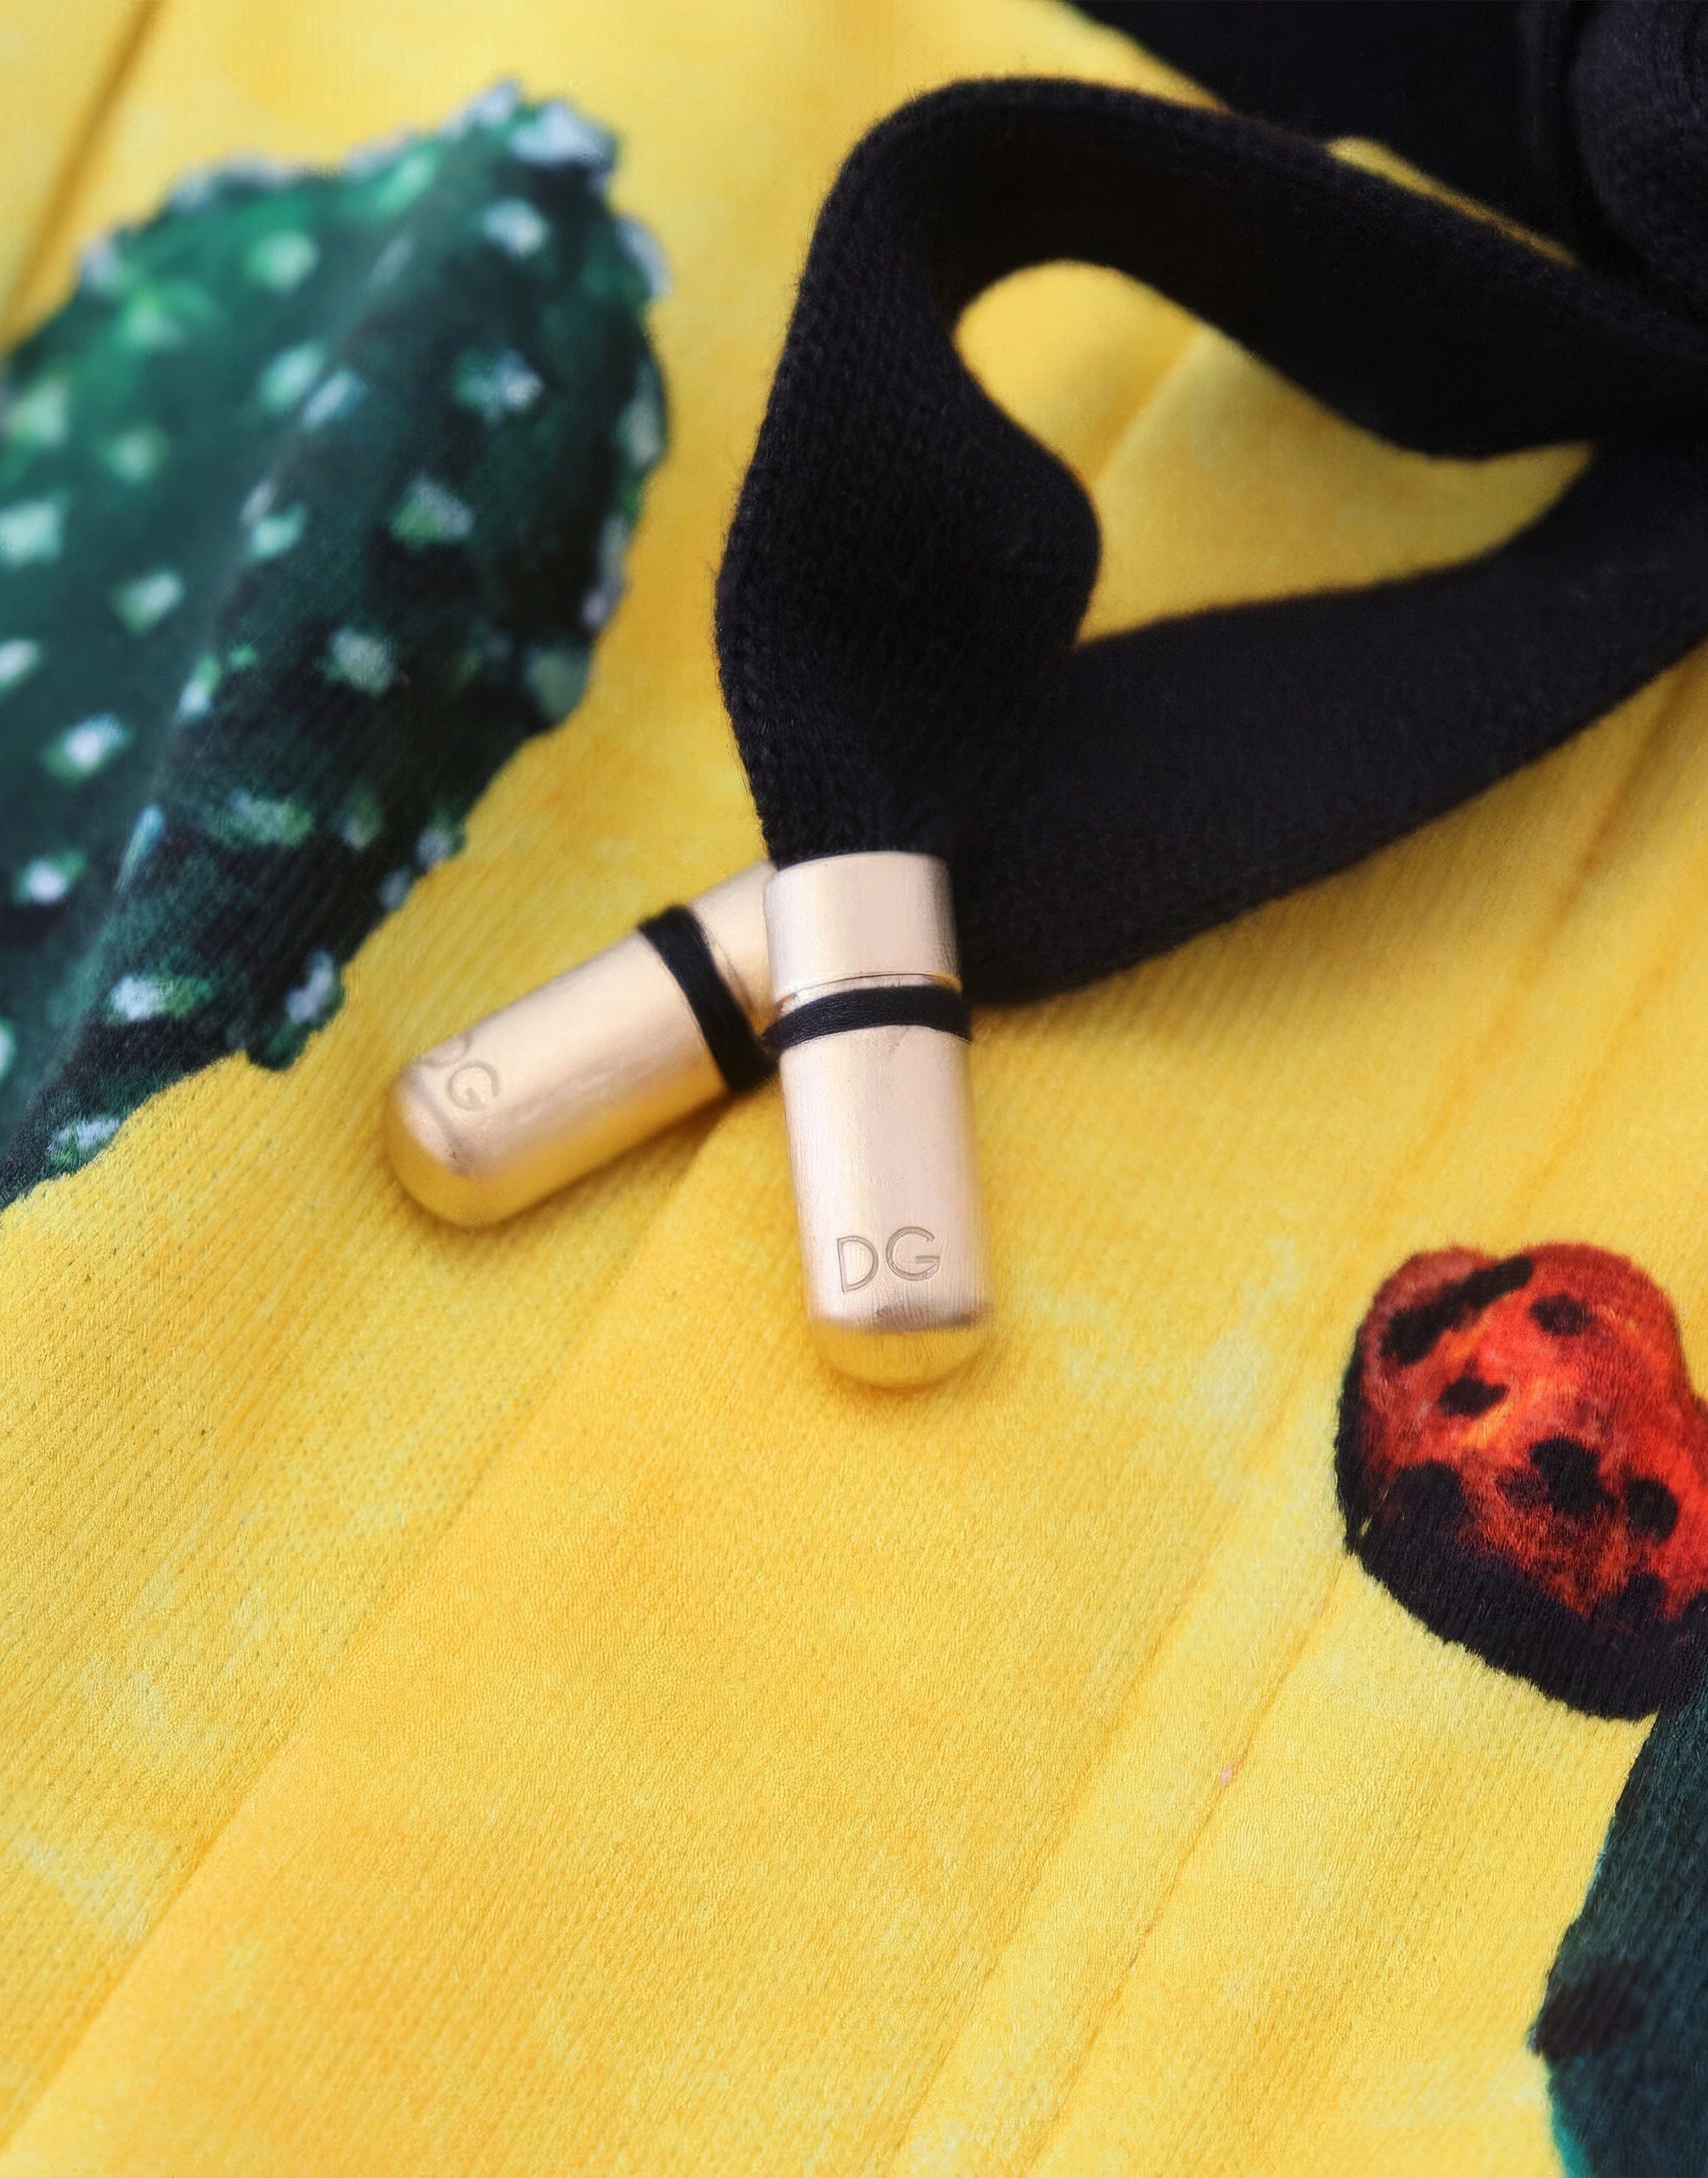 Dolce & Gabbana Majolica-Print Cotton Shorts